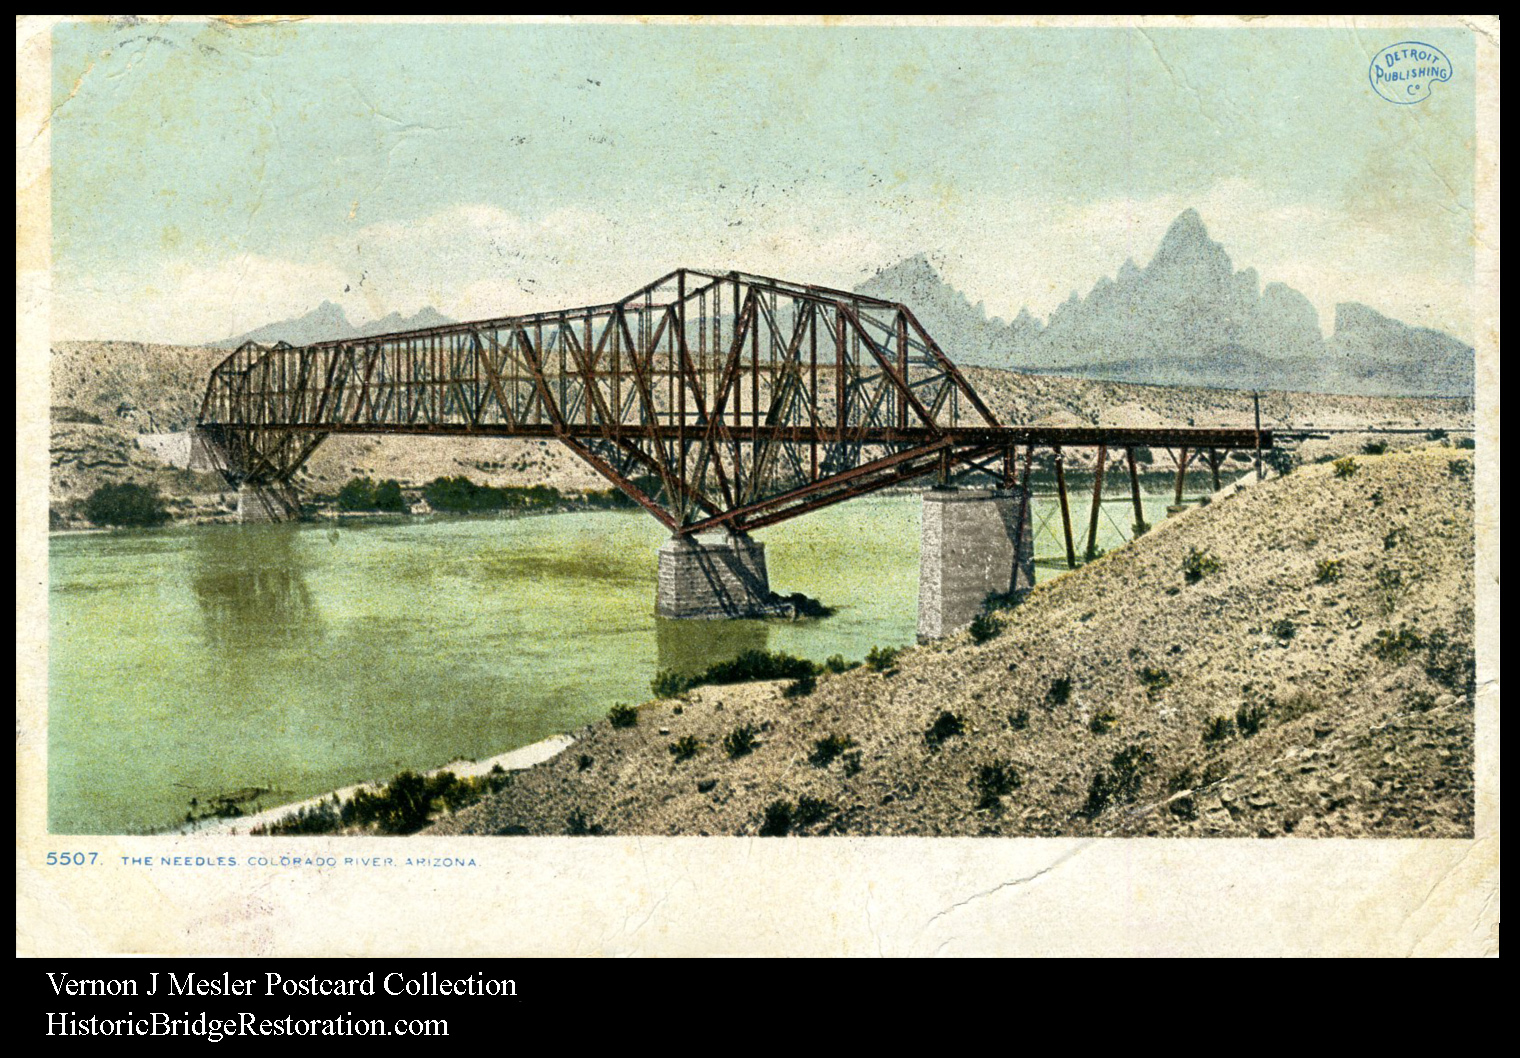 The Needles Colorado River, Arizona, 1907